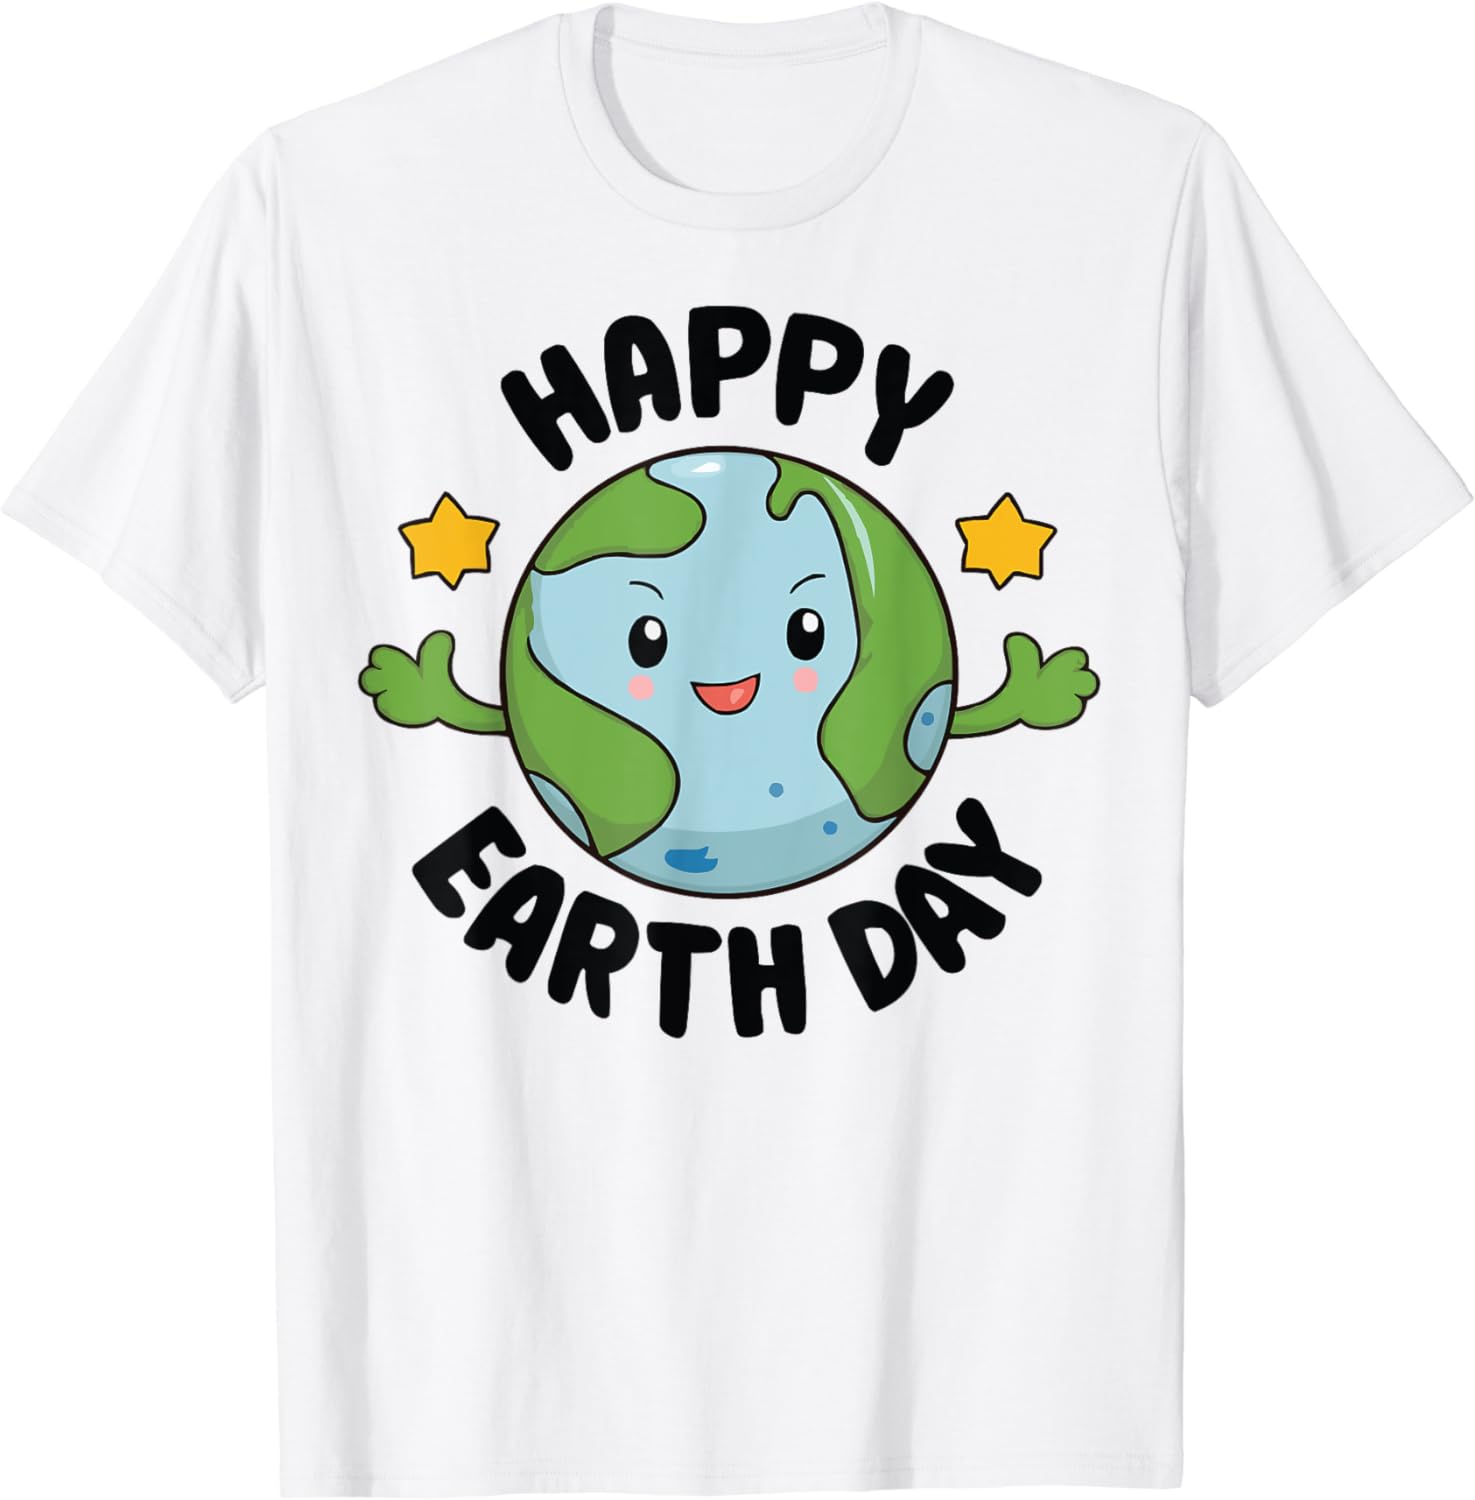 Get a Fun Eco-Friendly Earth Day Shirt!